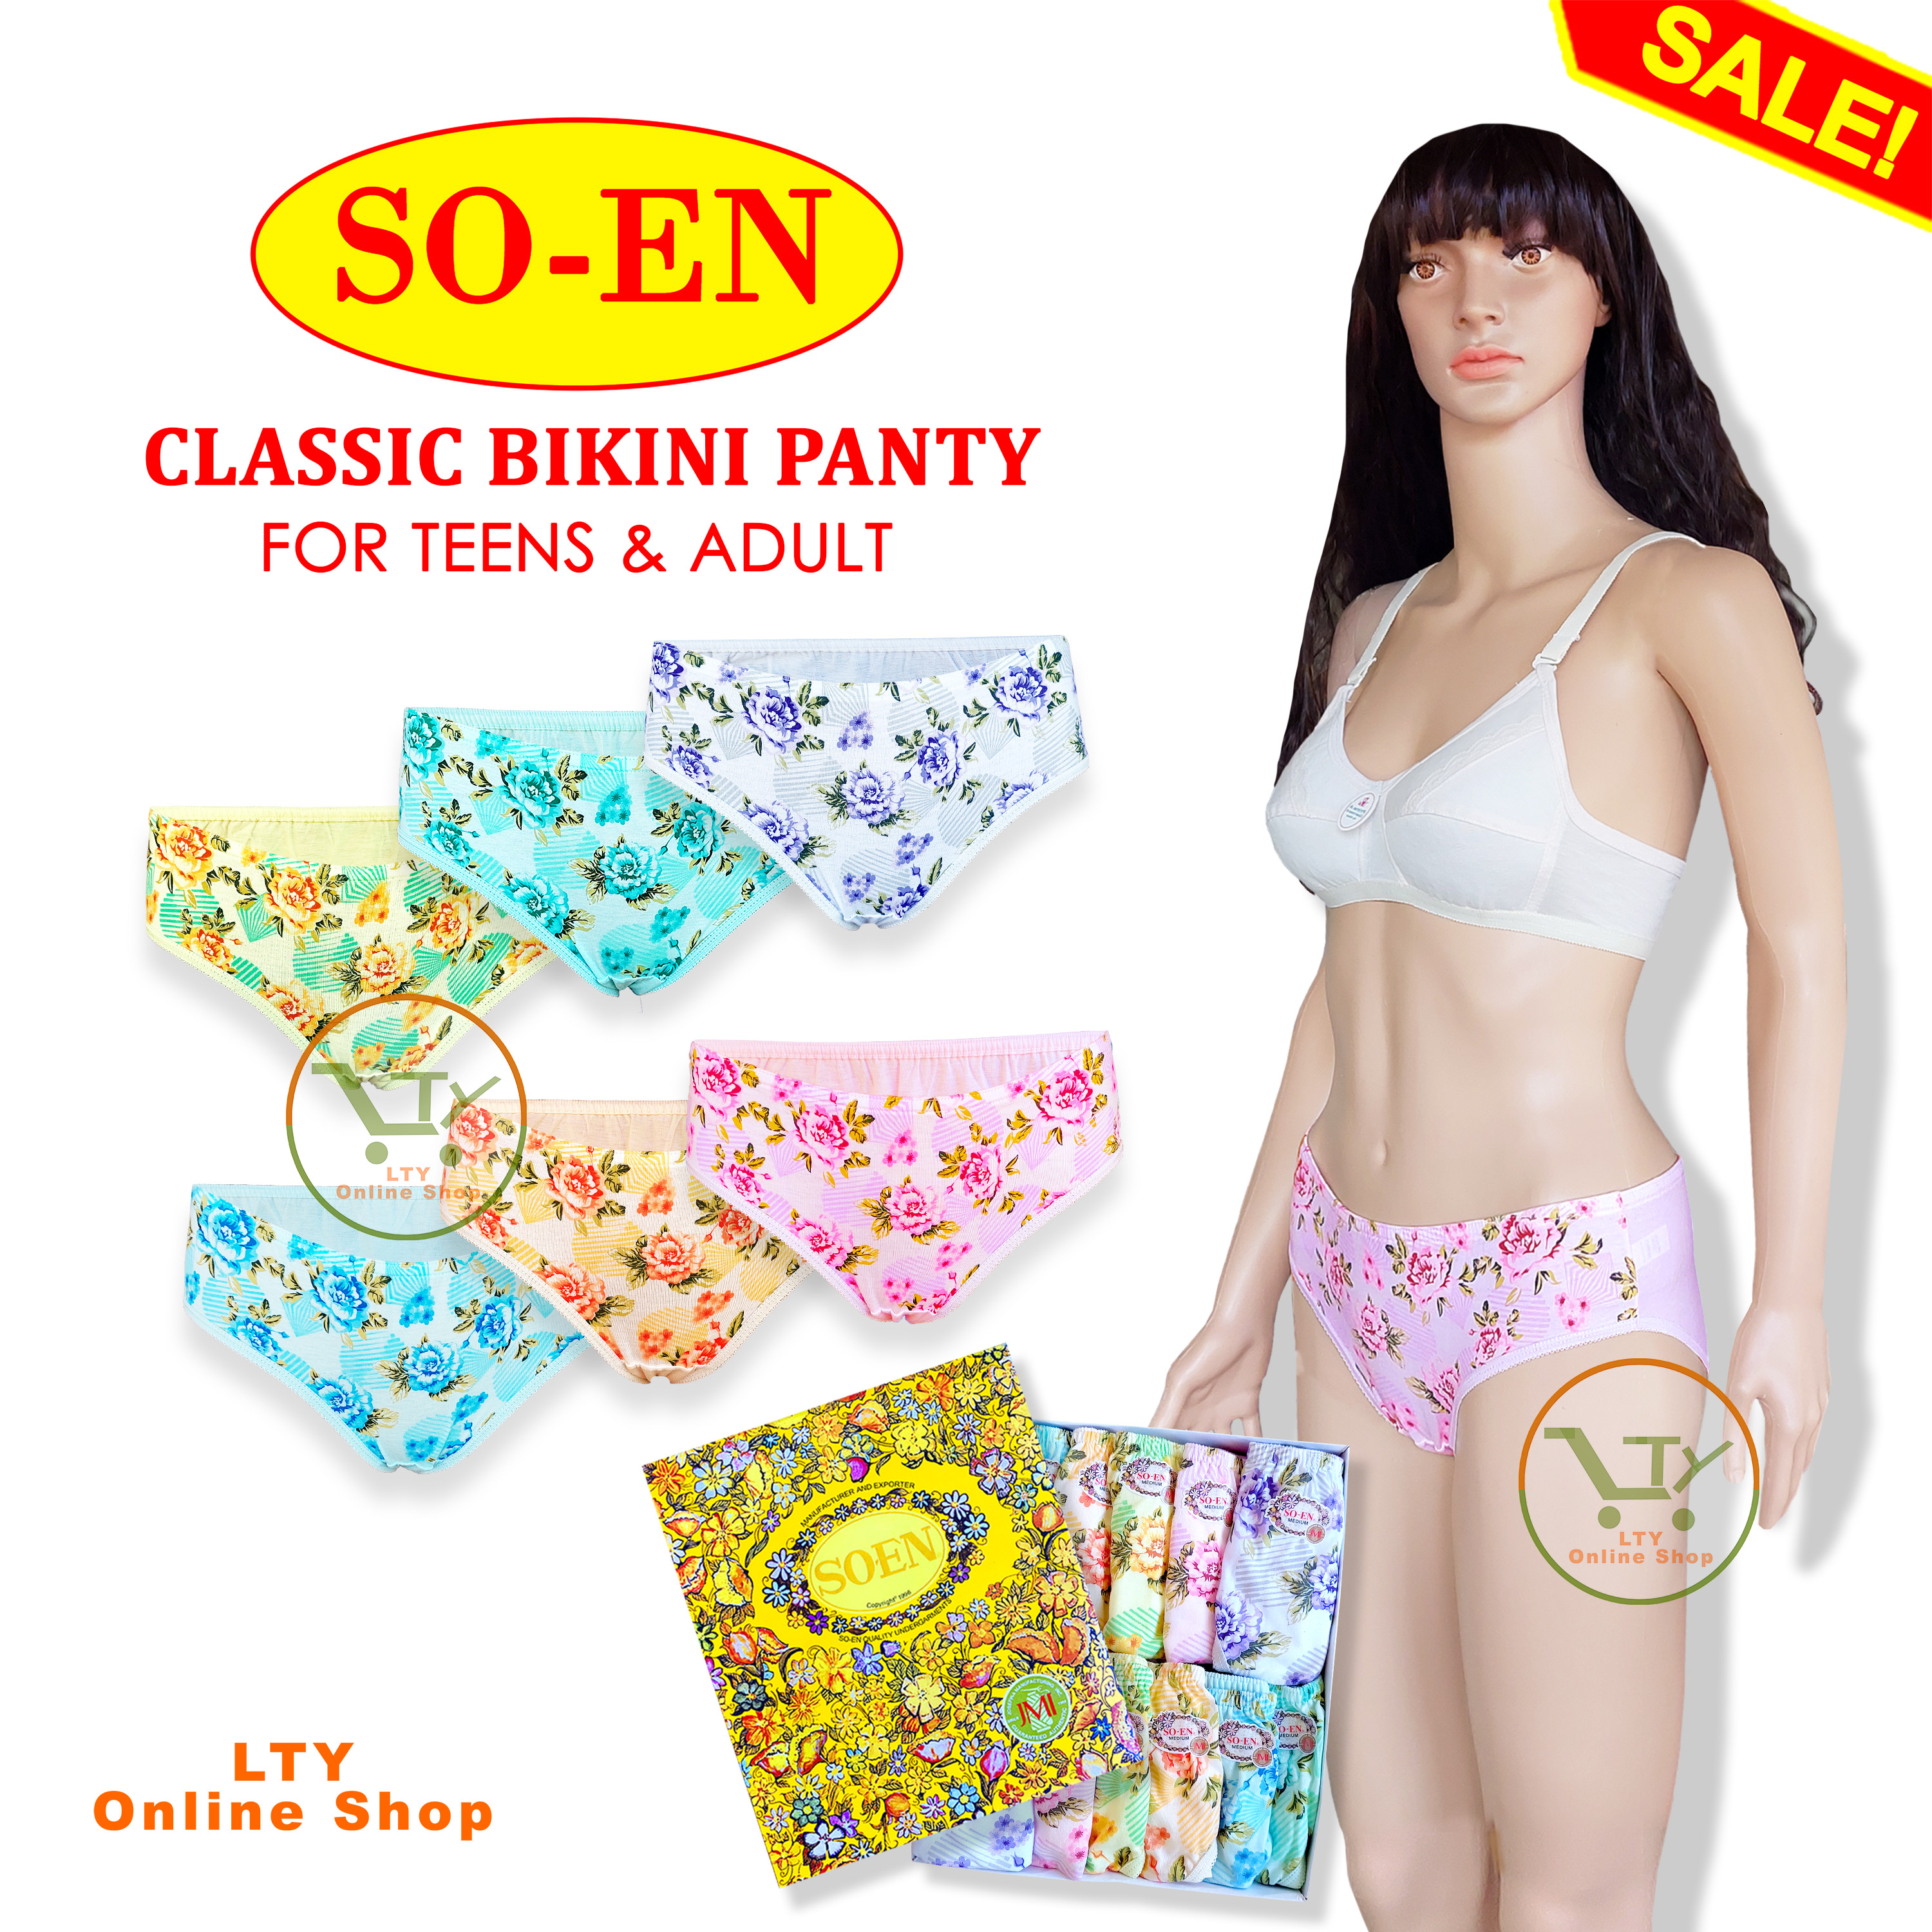 SOEN PANTY WOMEN ORIGINAL PER PIECE So-En Bikini Underwear Cotton